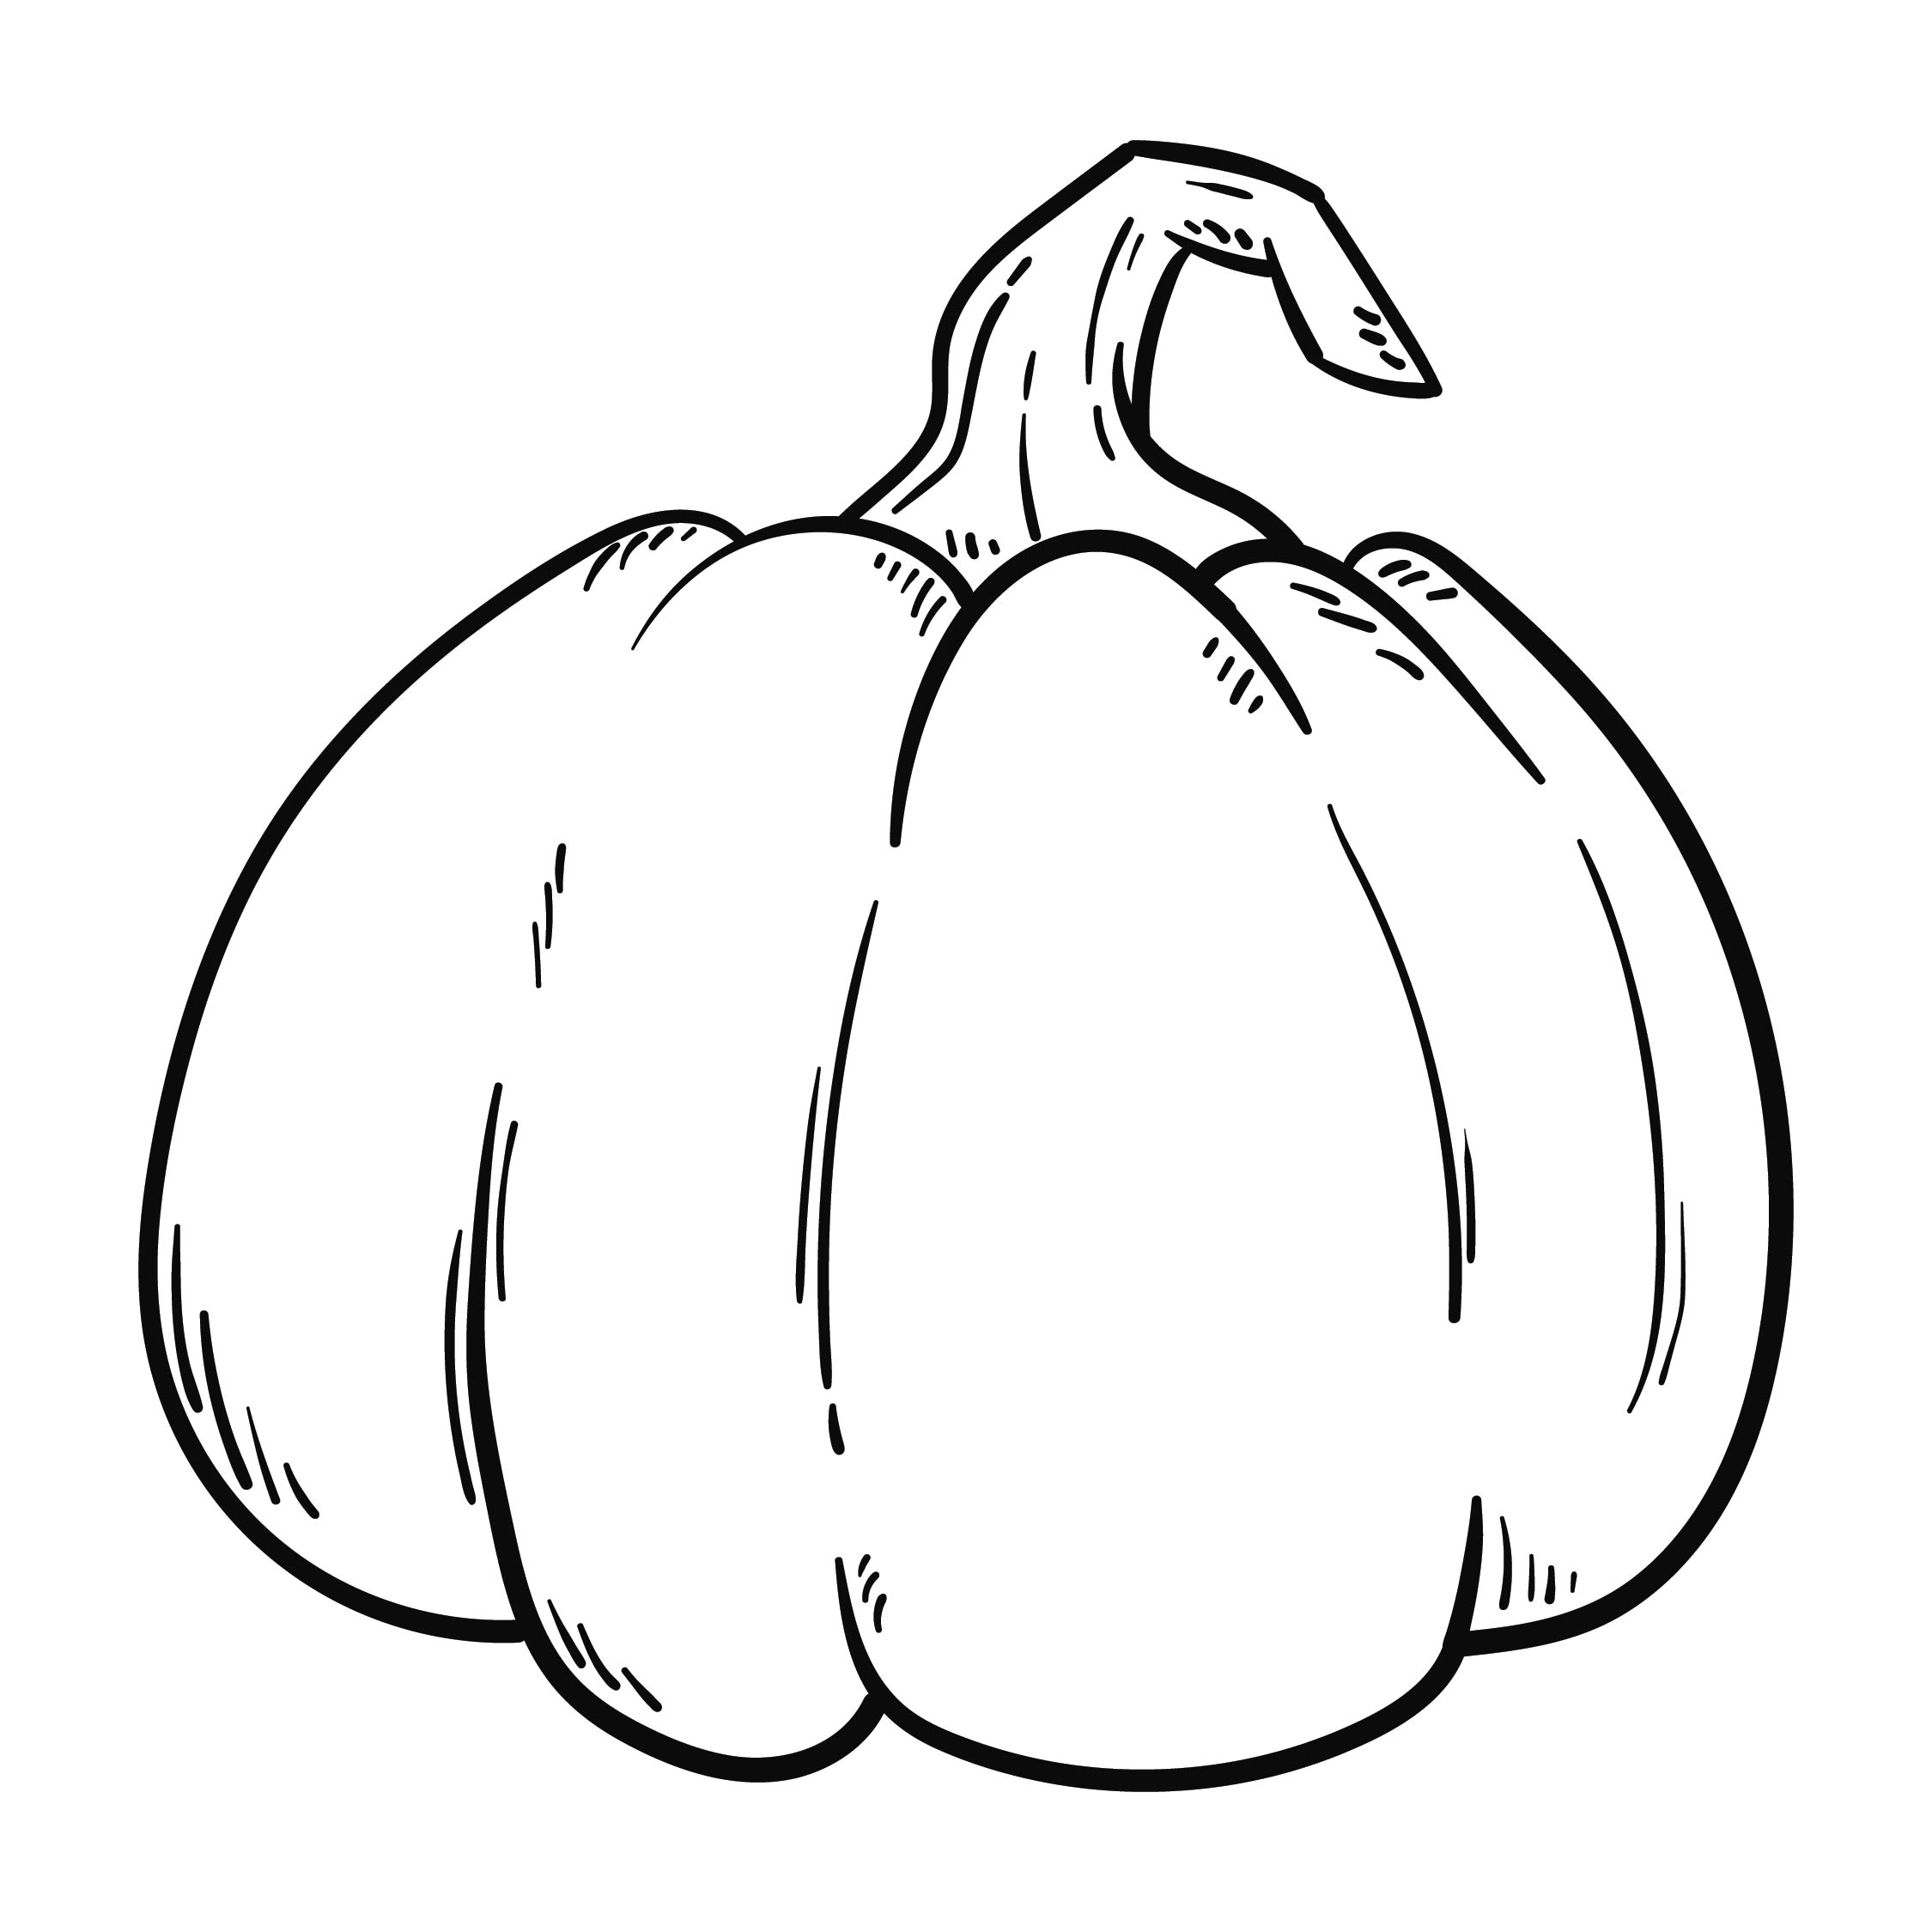 5 Best Images of Free Halloween Printable Pumpkins Outline Pumpkin